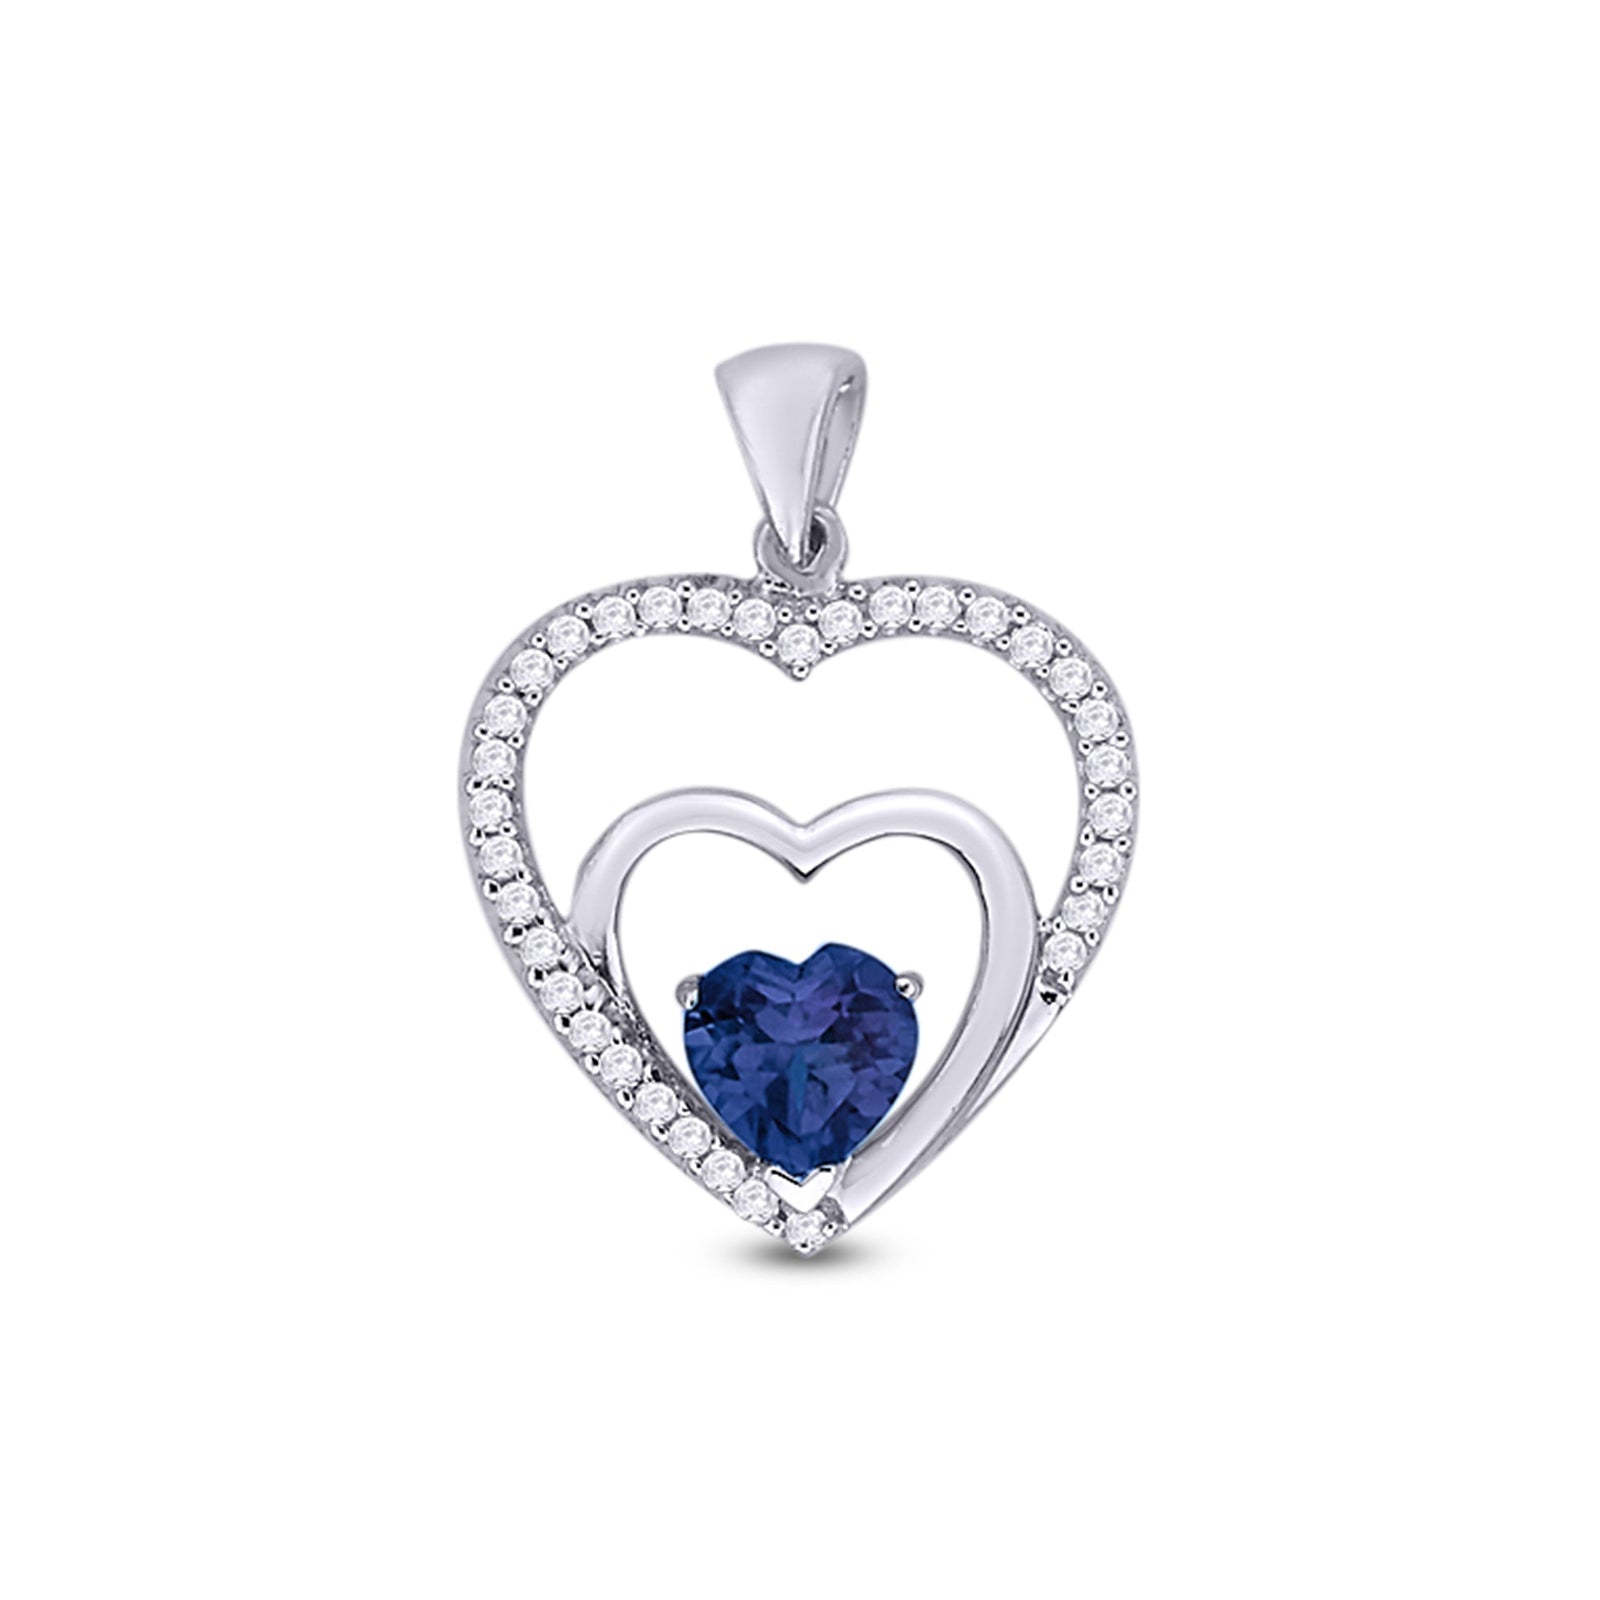 9ct white gold heart shape sapphire in diamond set heart pendant 0.16ct